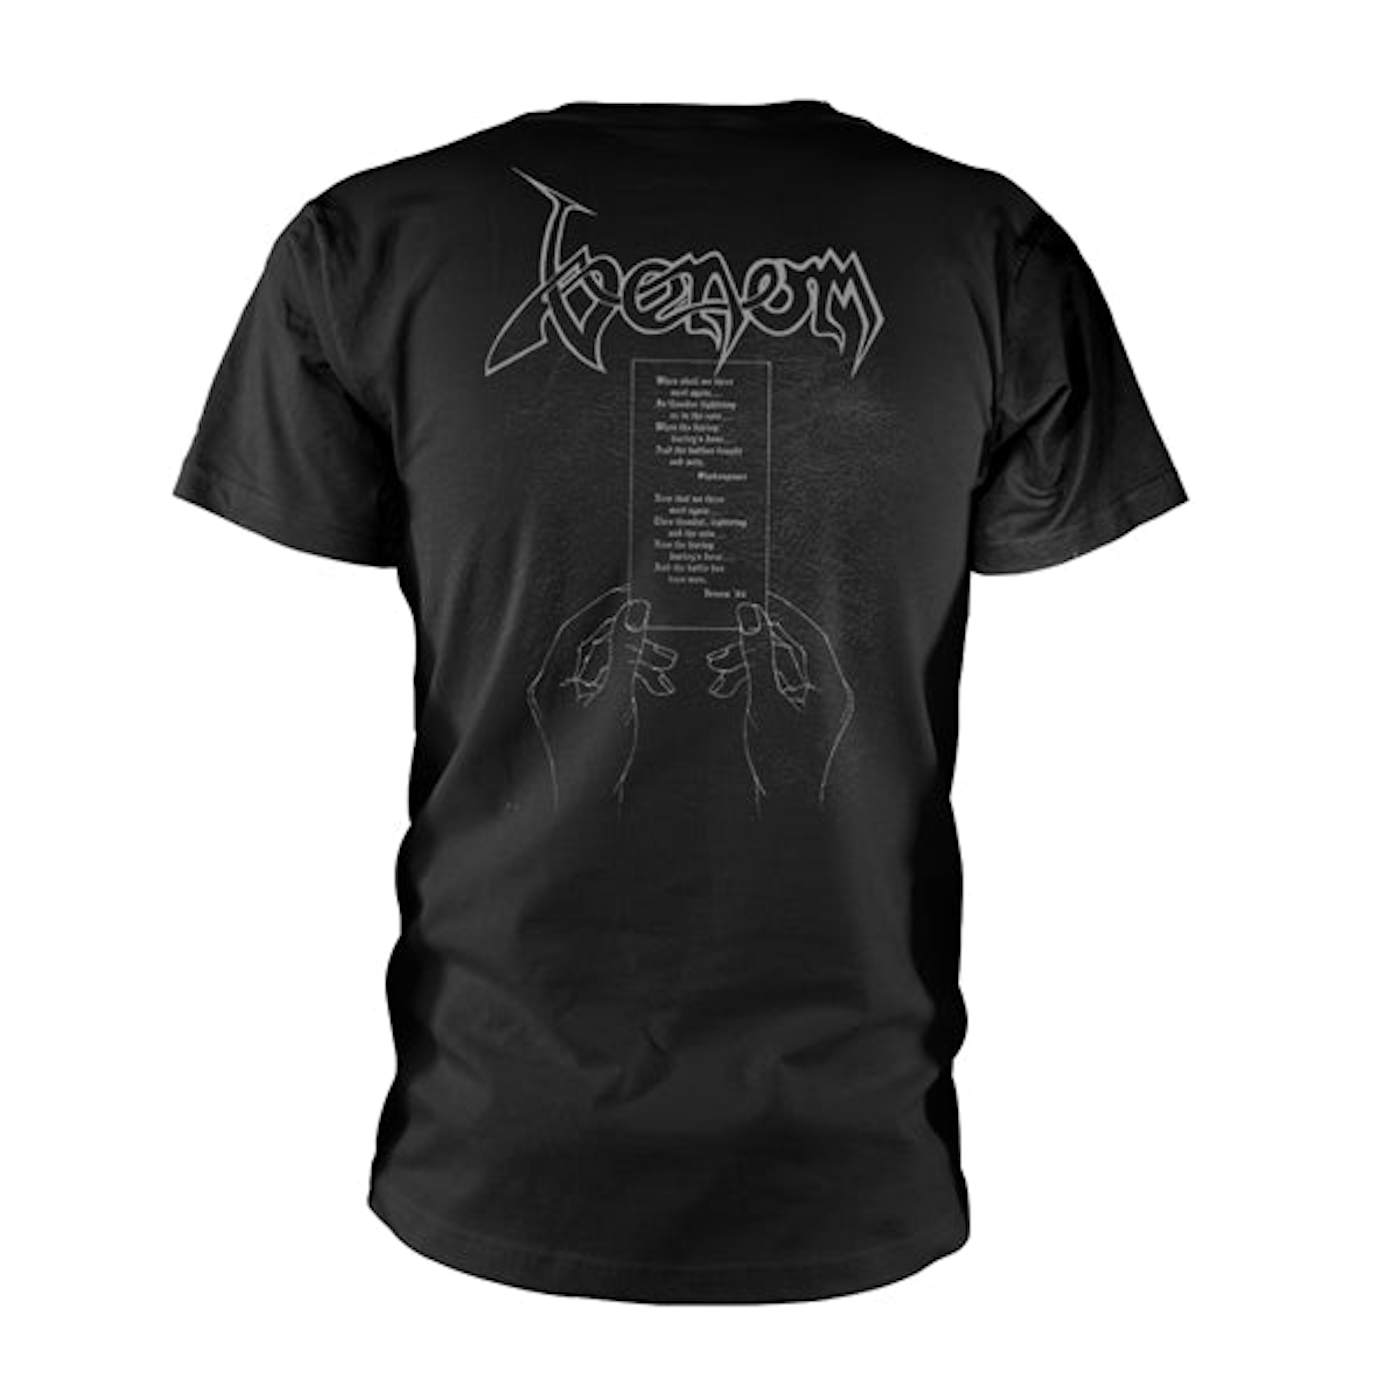  Venom T Shirt - At War With Satan